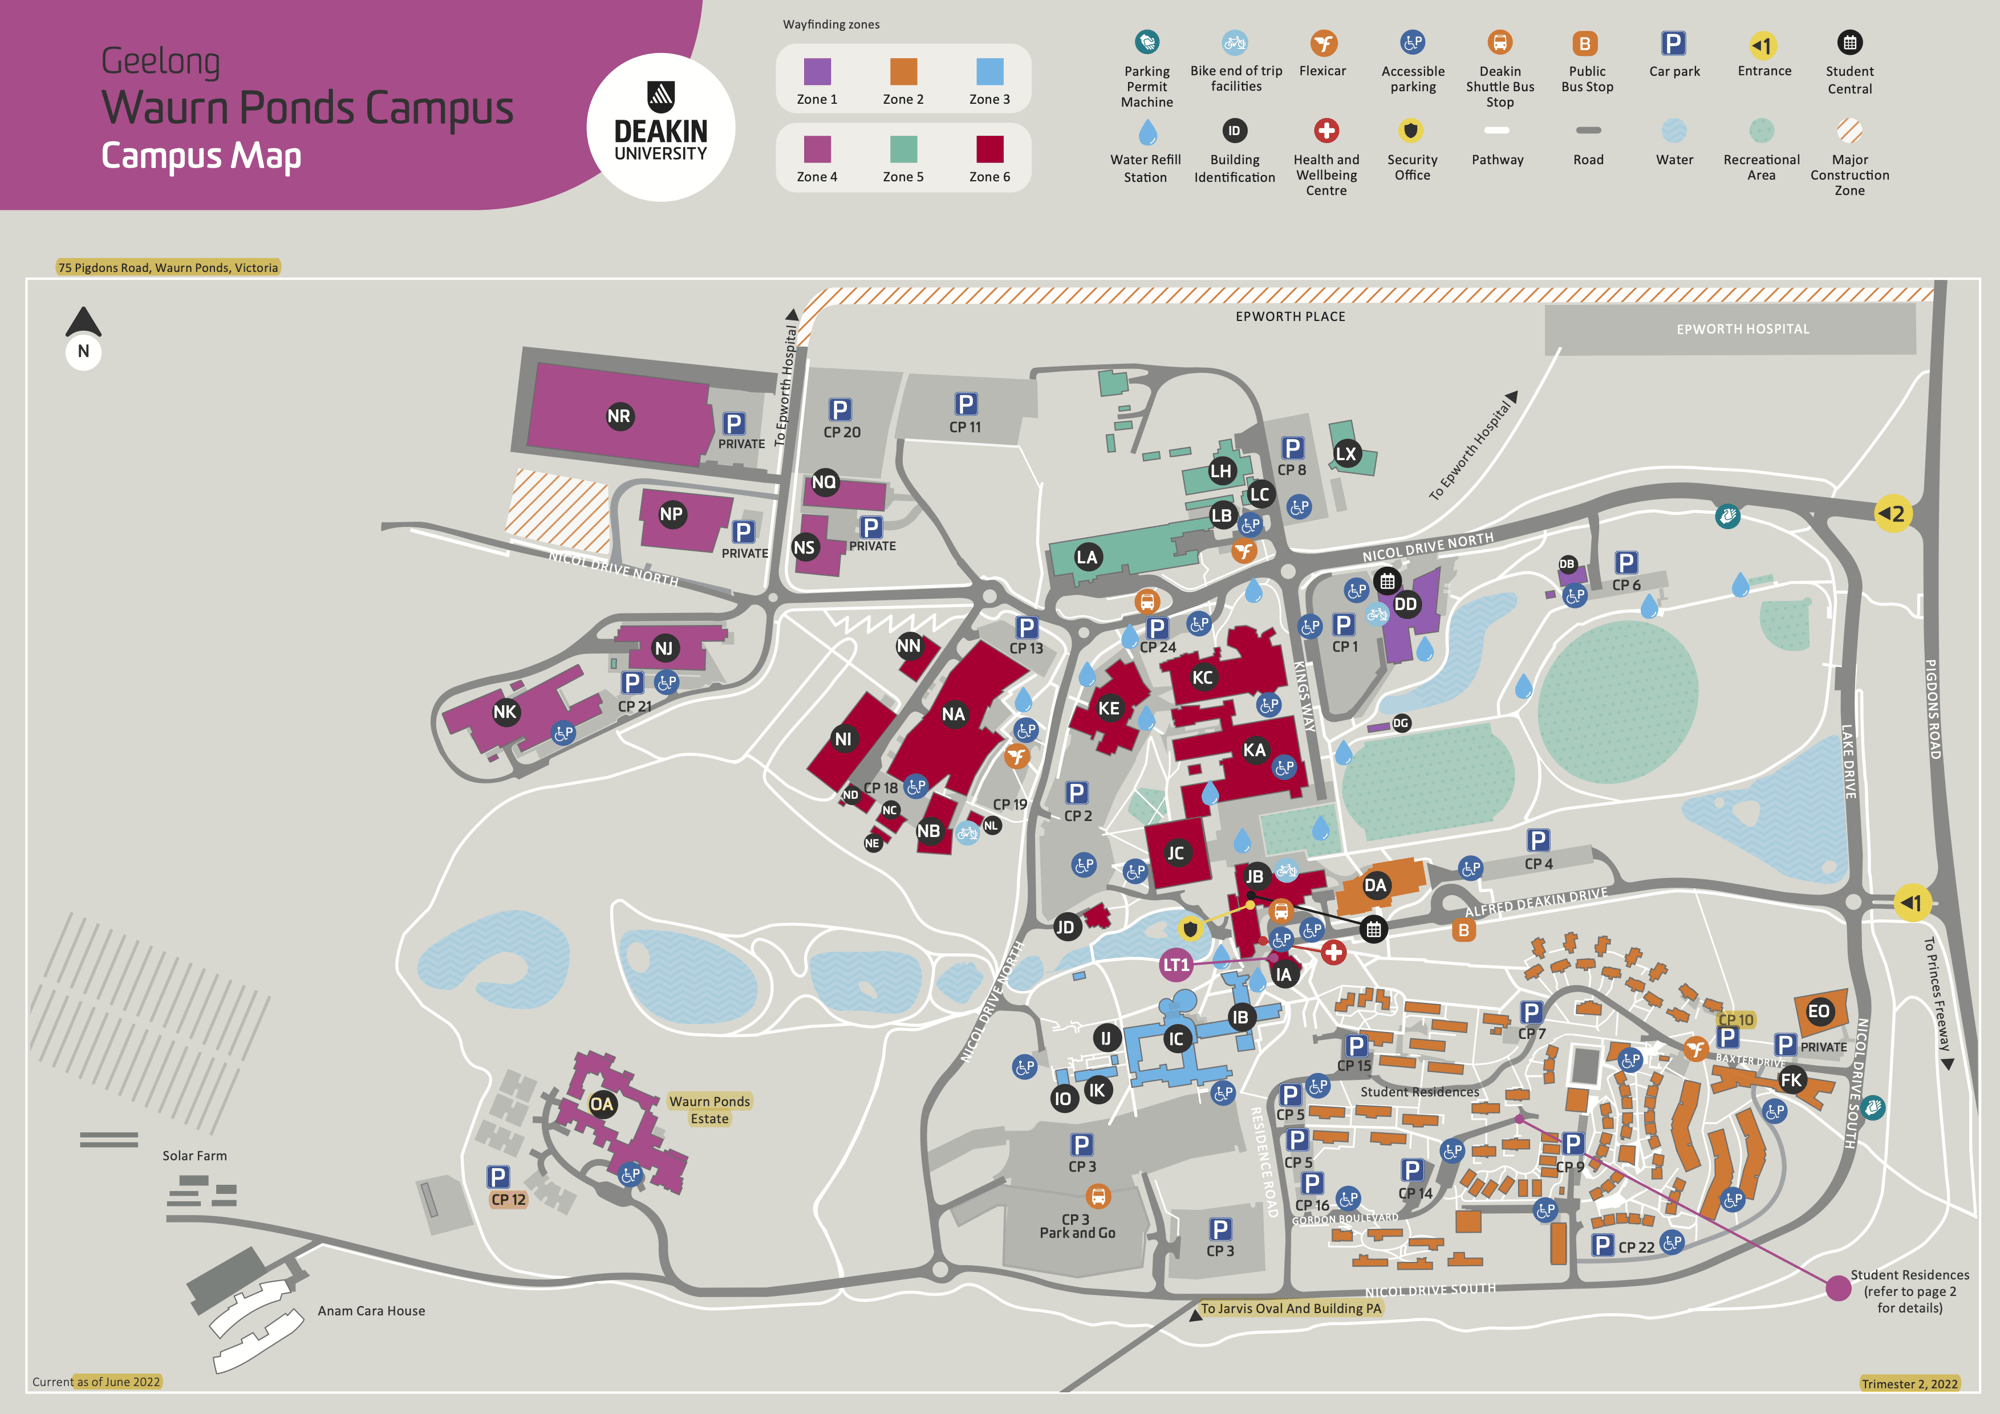 geelong-waurn-ponds-campus-map